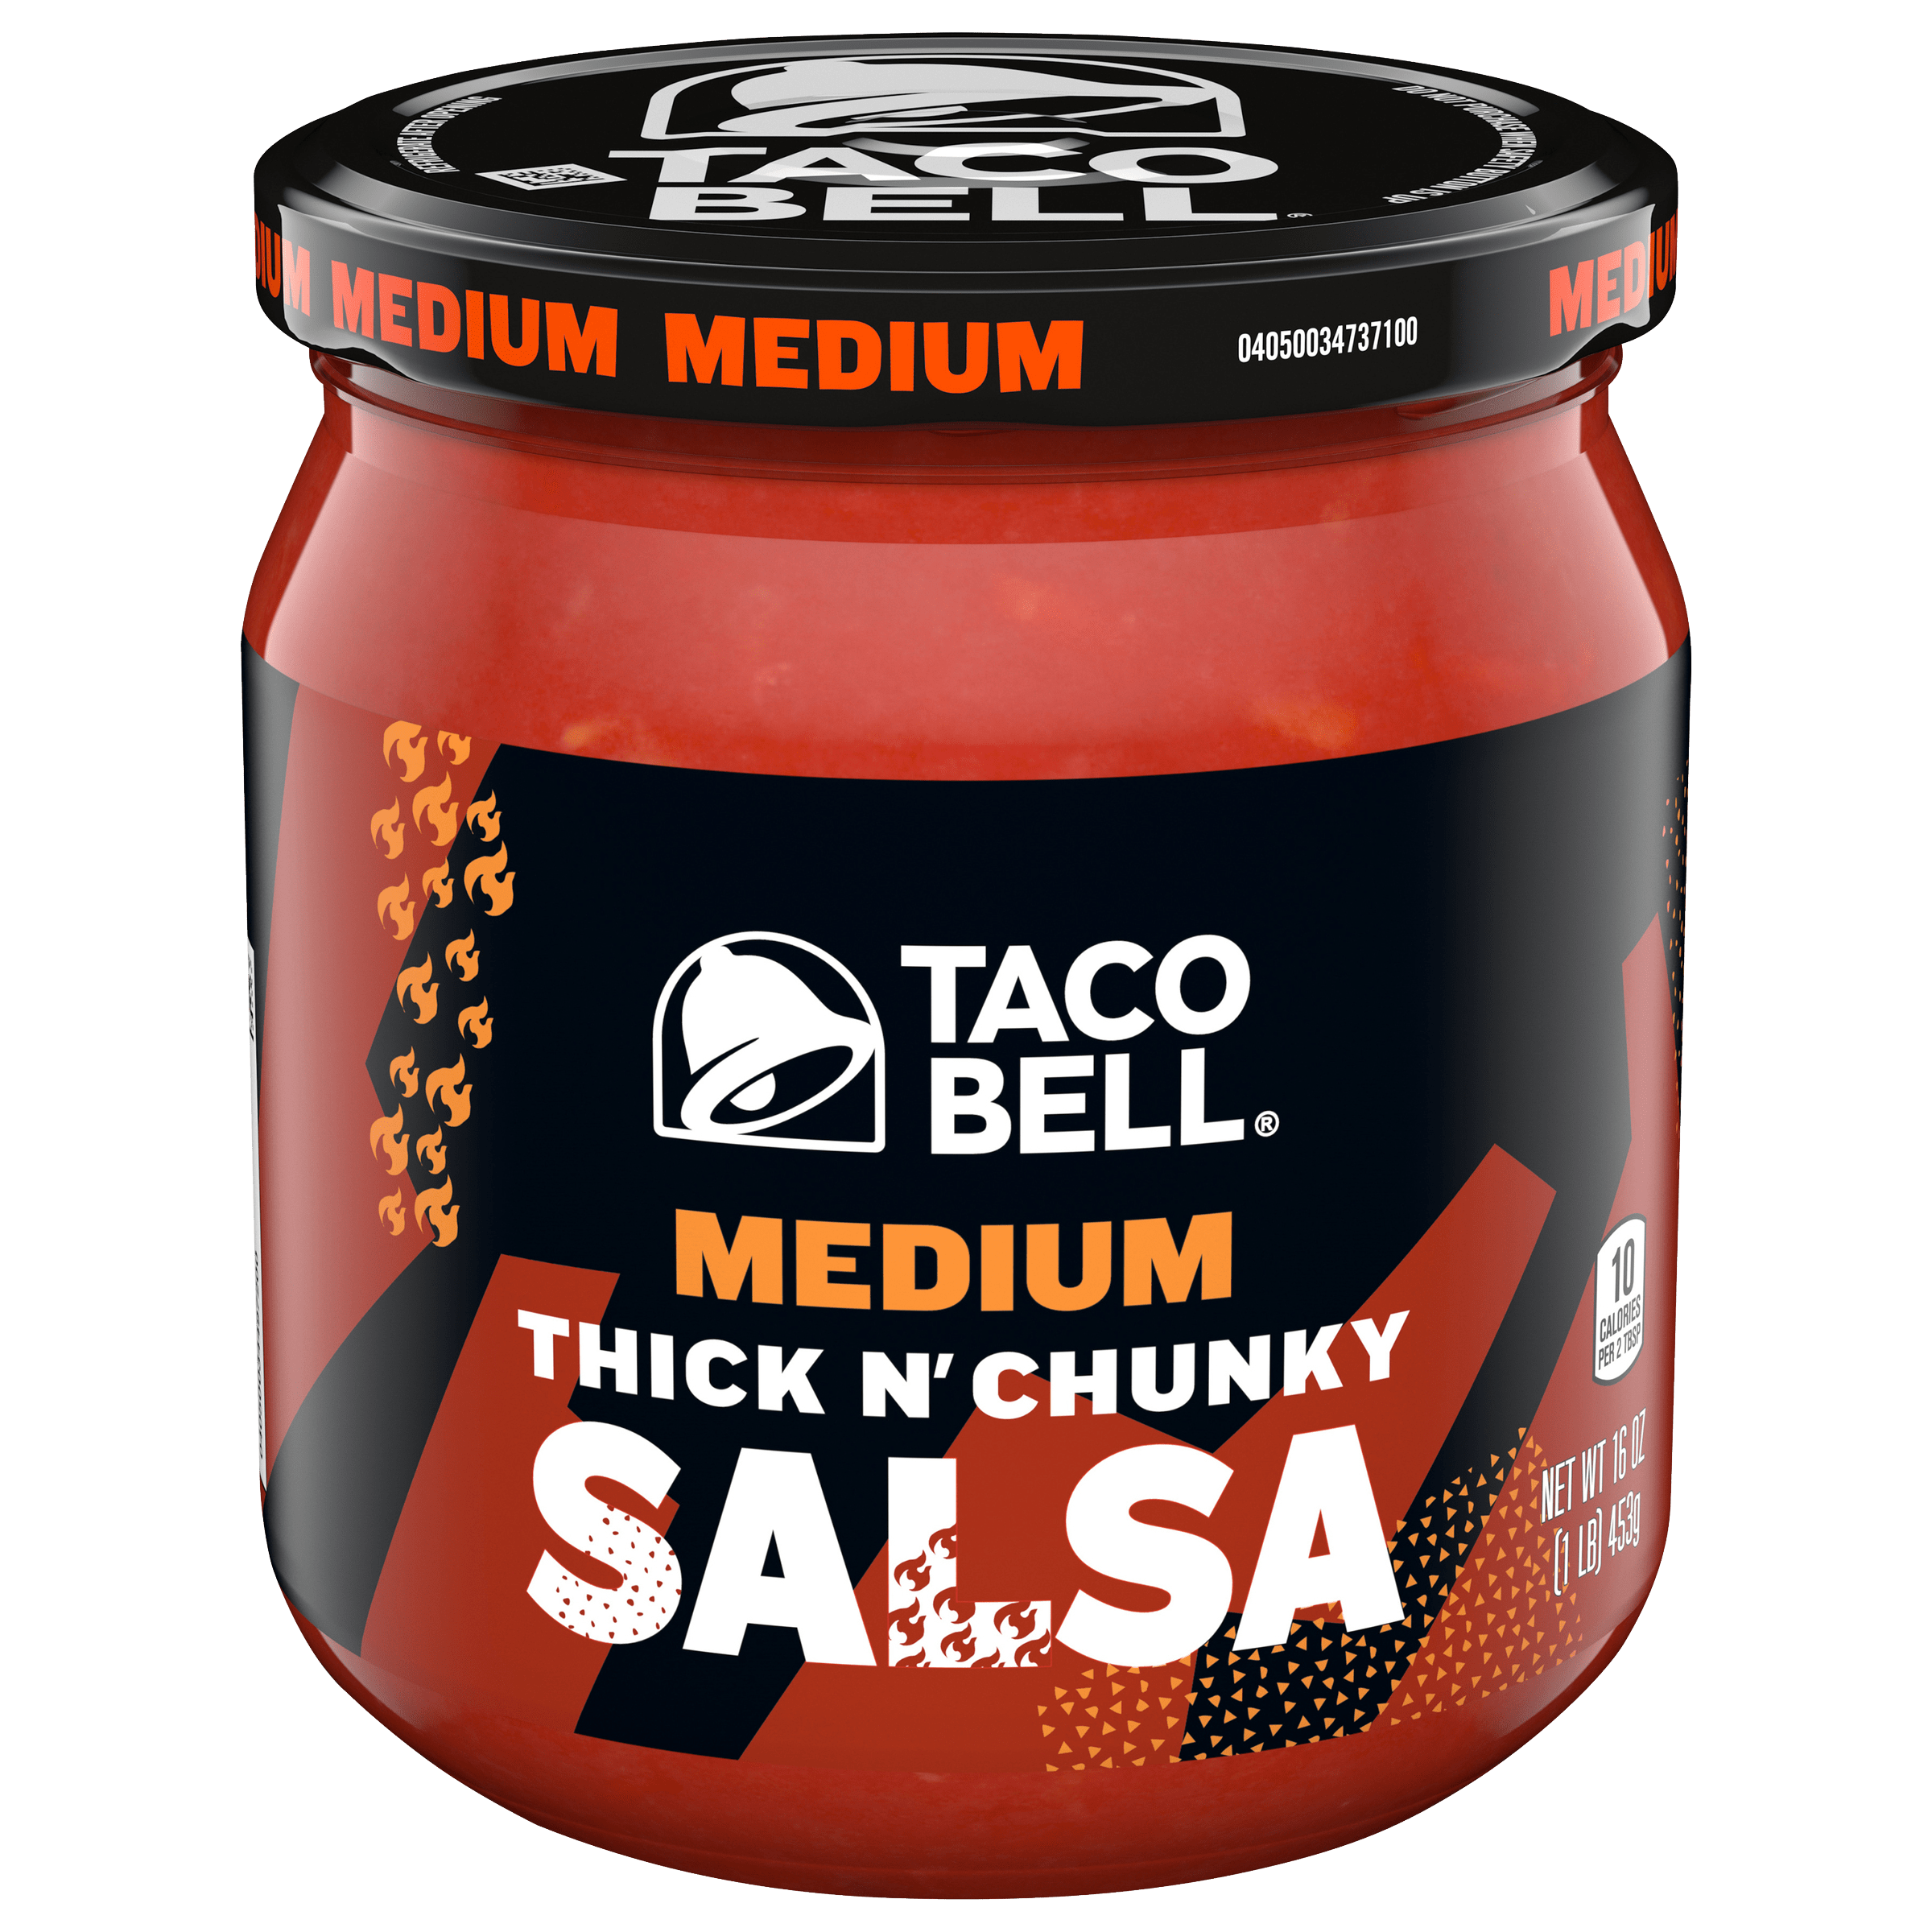 Medium Thick N' Chunky Salsa